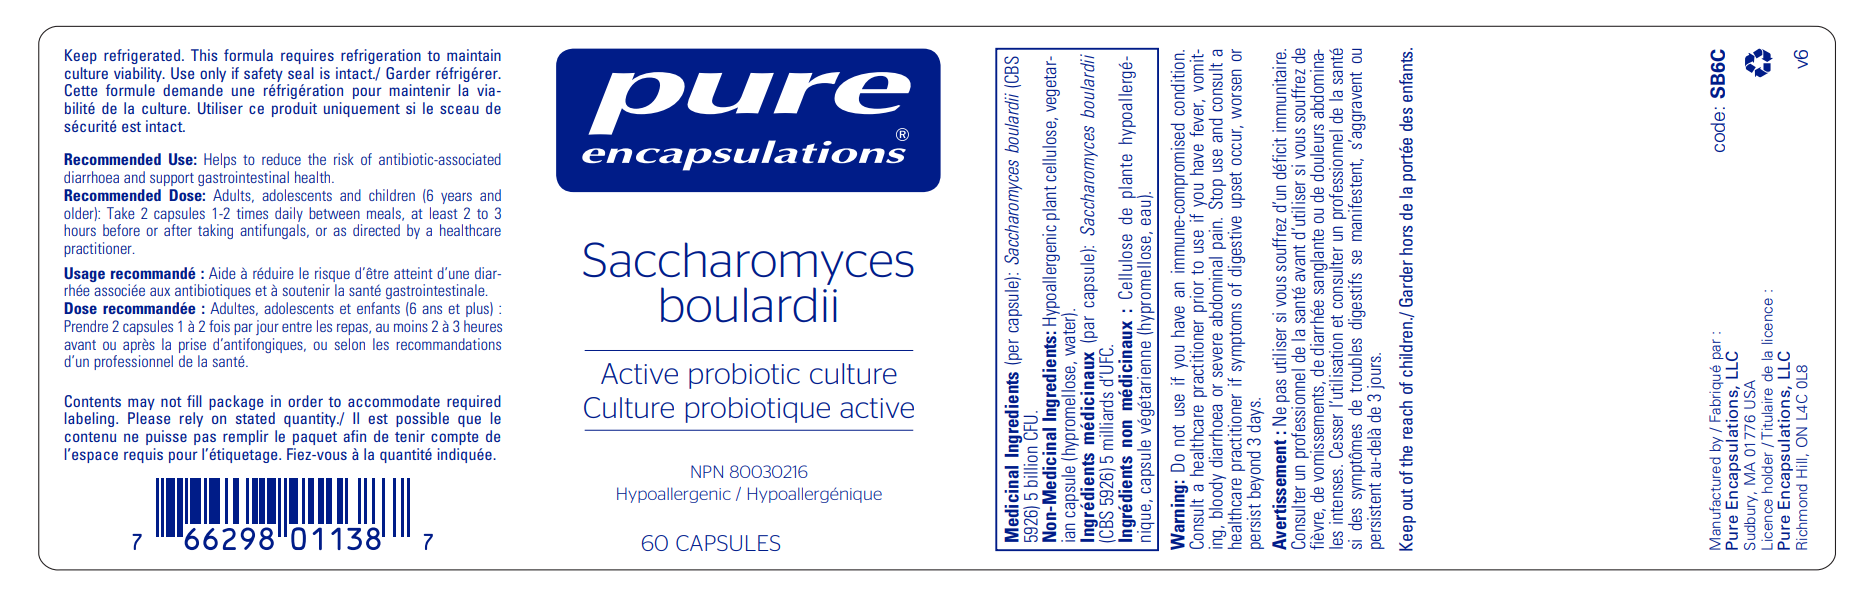 Pure Encapsulations Saccharomyces boulardii